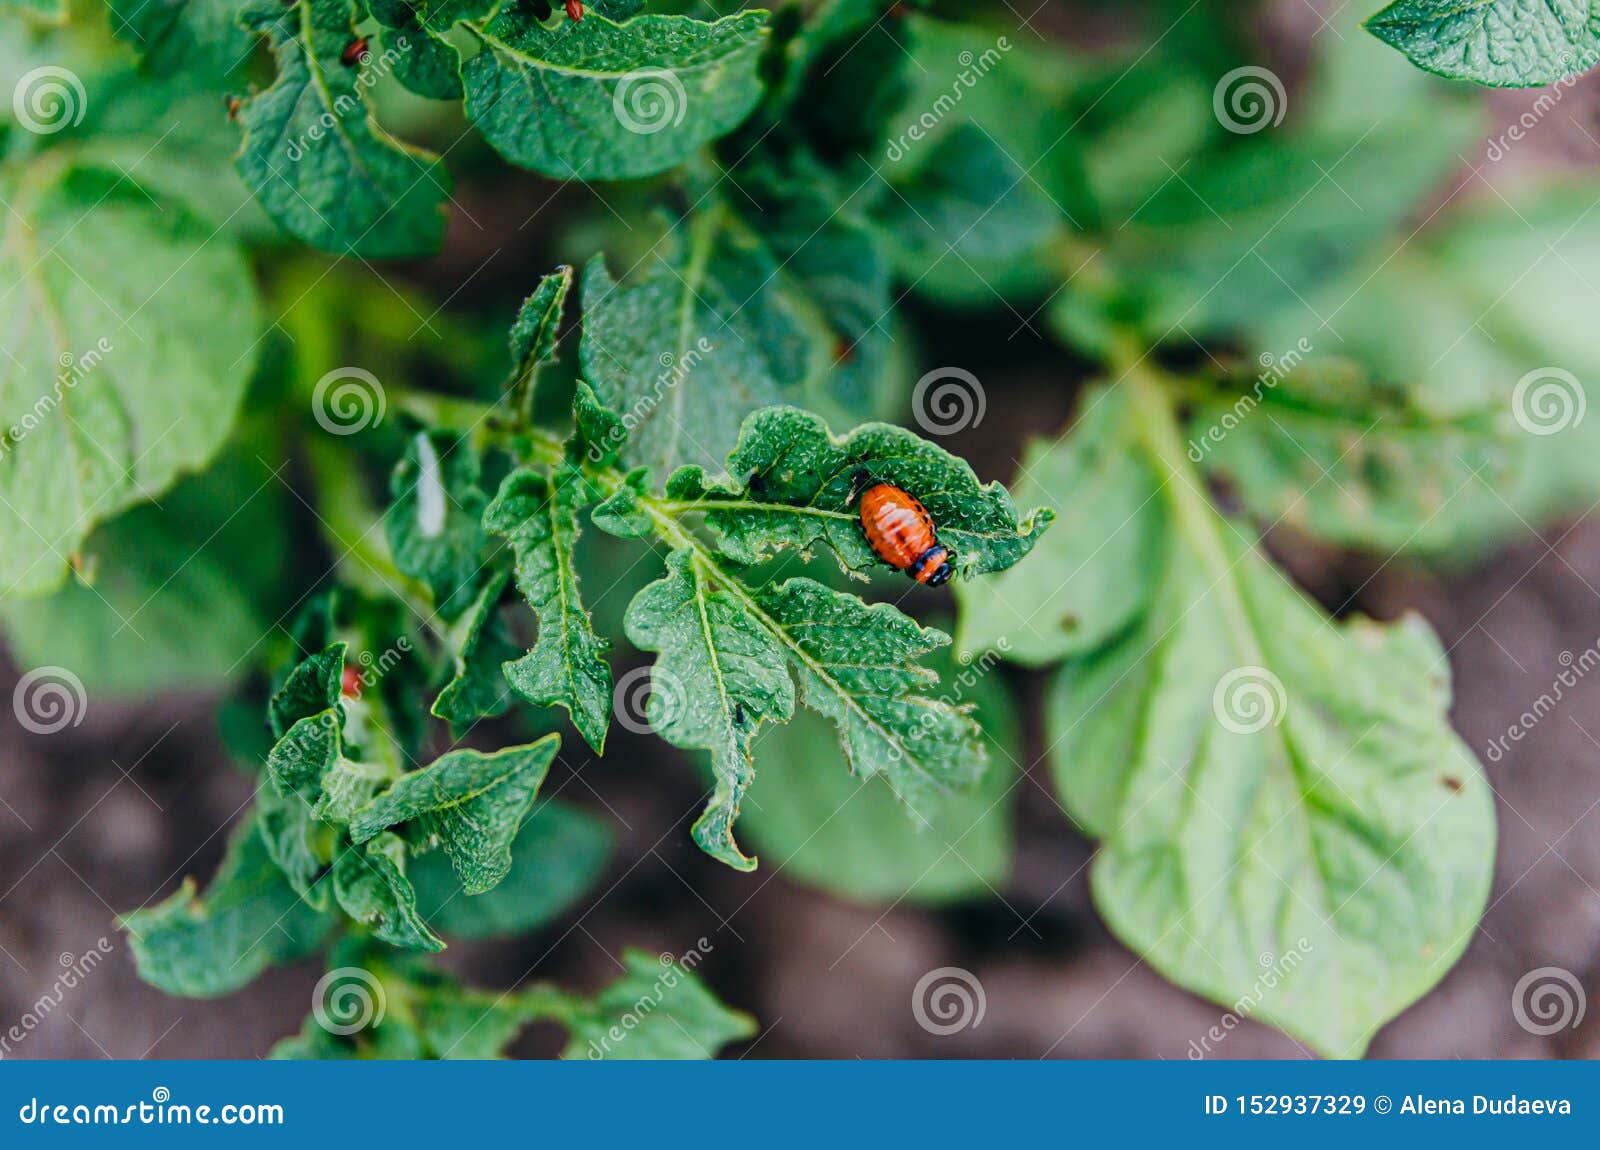 Pests In The Garden The Larva Of The Colorado Potato Beetle Eats